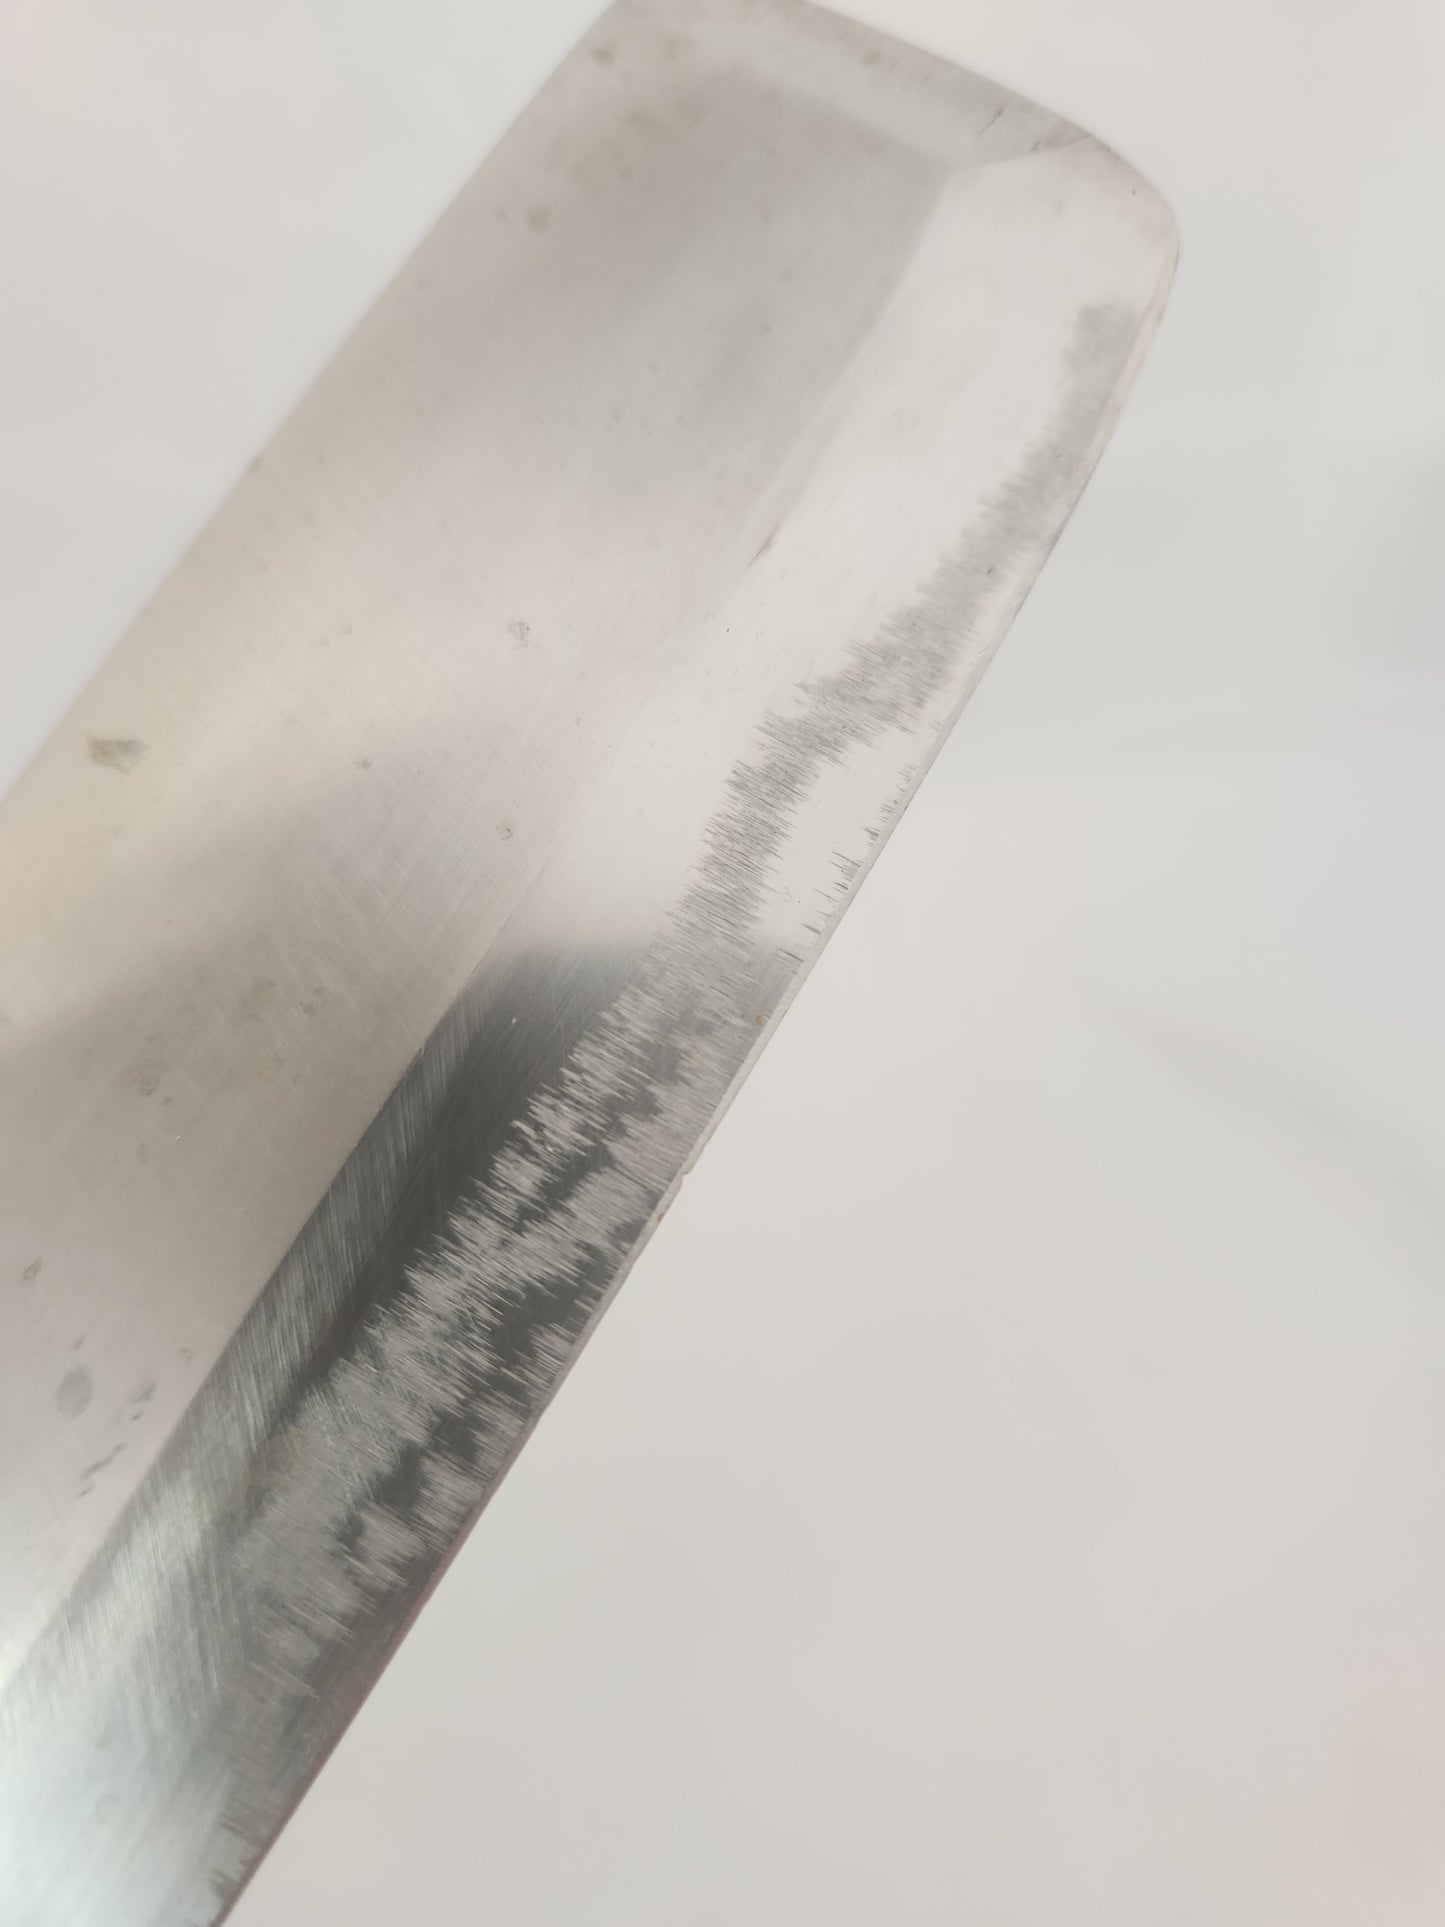 Bummei 7" USUBA Knife